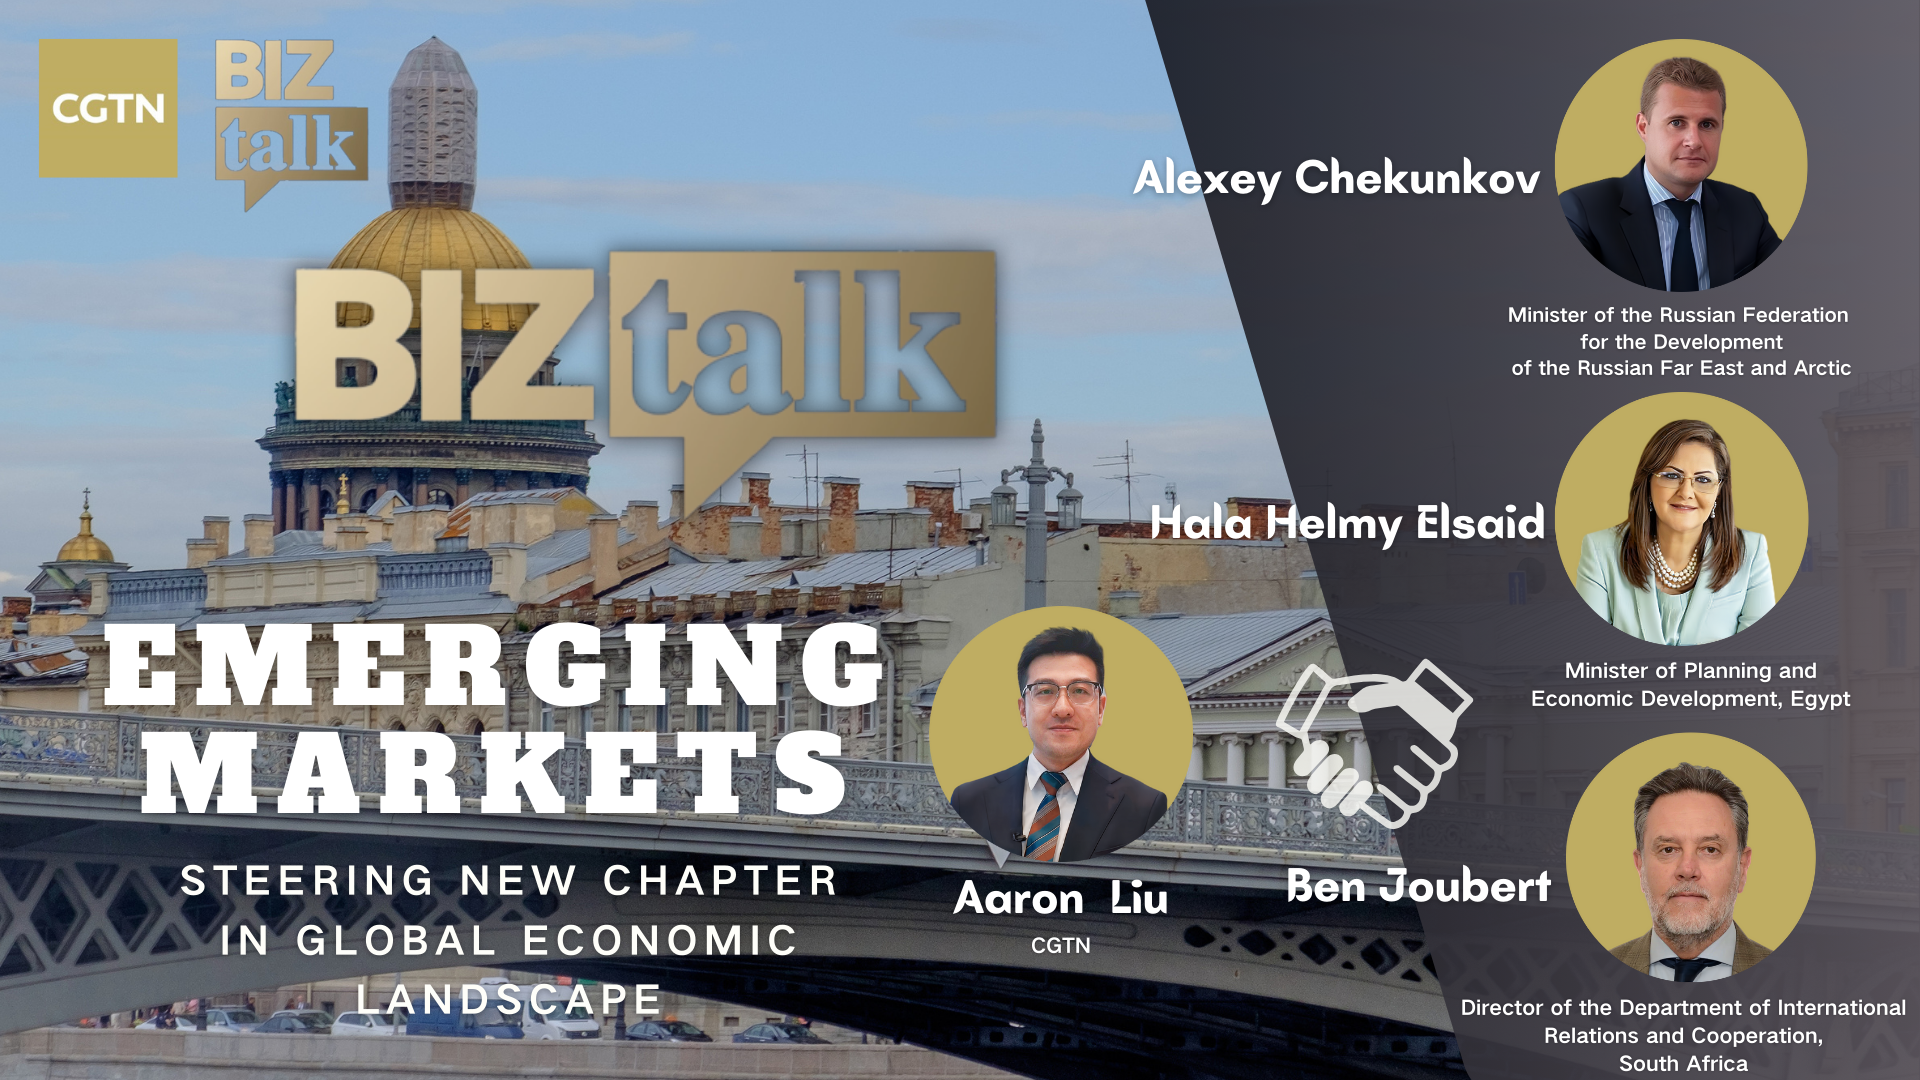 Watch: 'BizTalk' – Emerging markets steering new chapter in global economic landscape